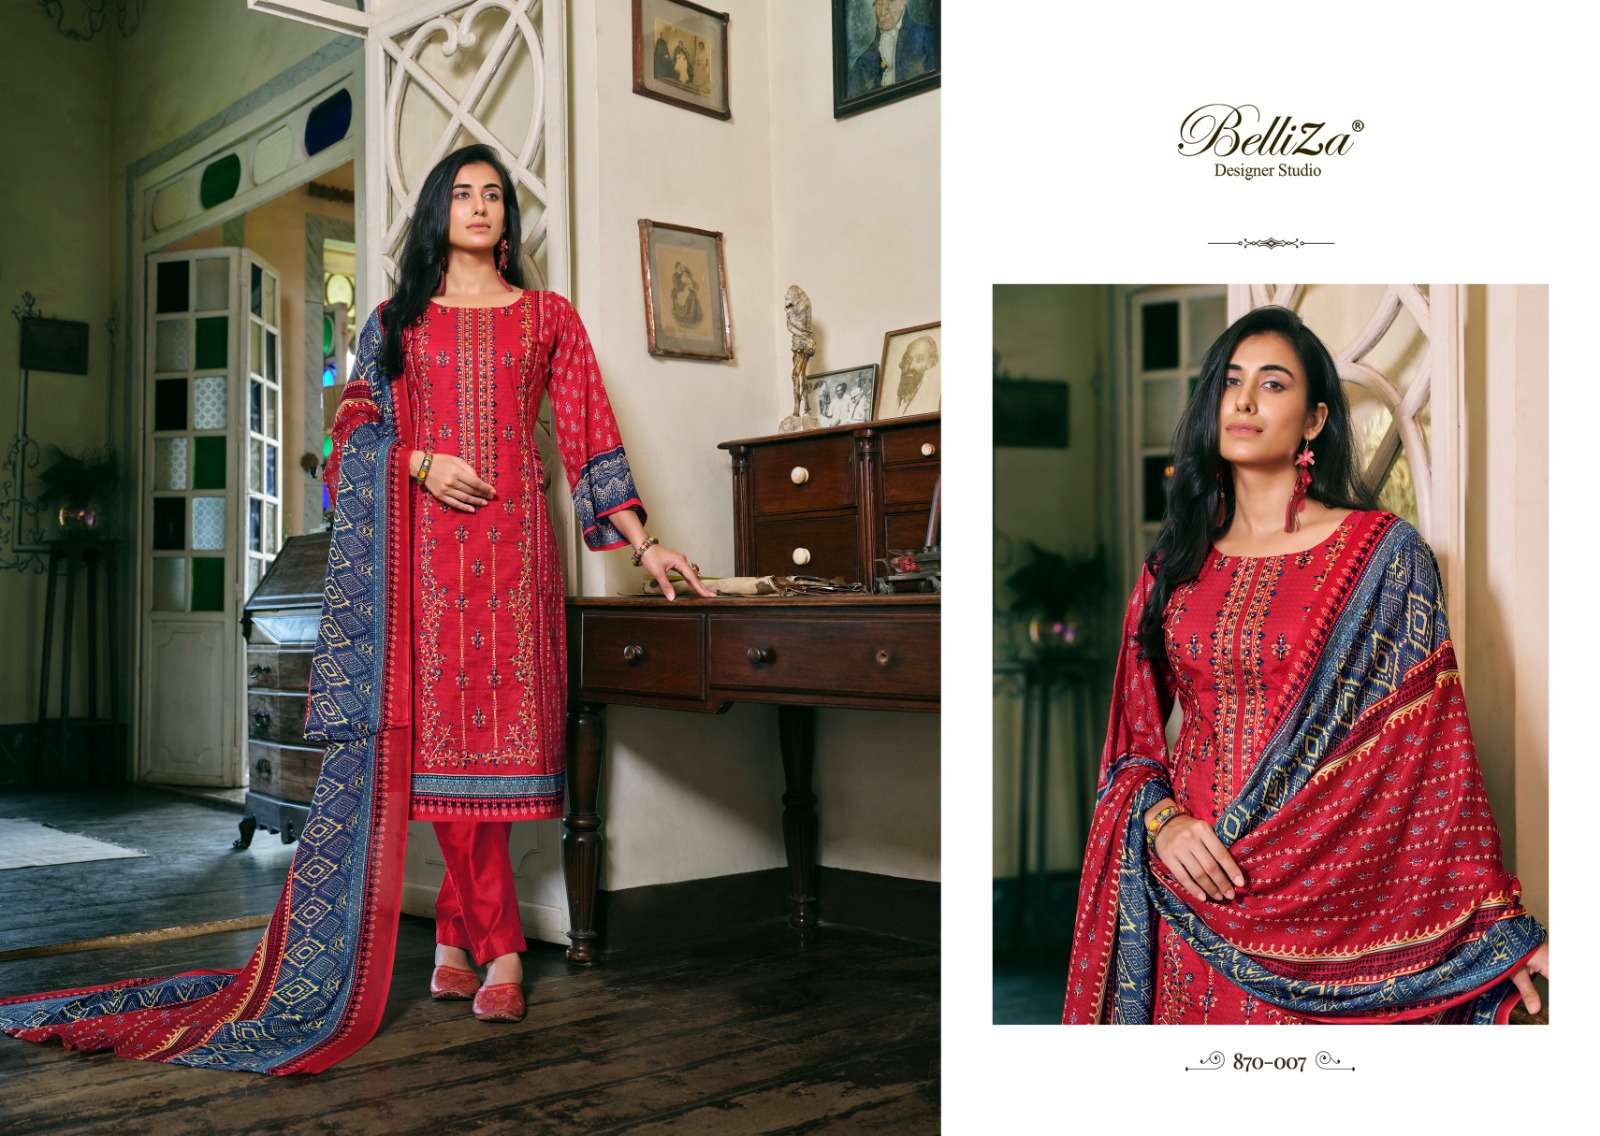 belliza designer studio binsaeed vol 2 cotton elegant salwar suit catalog